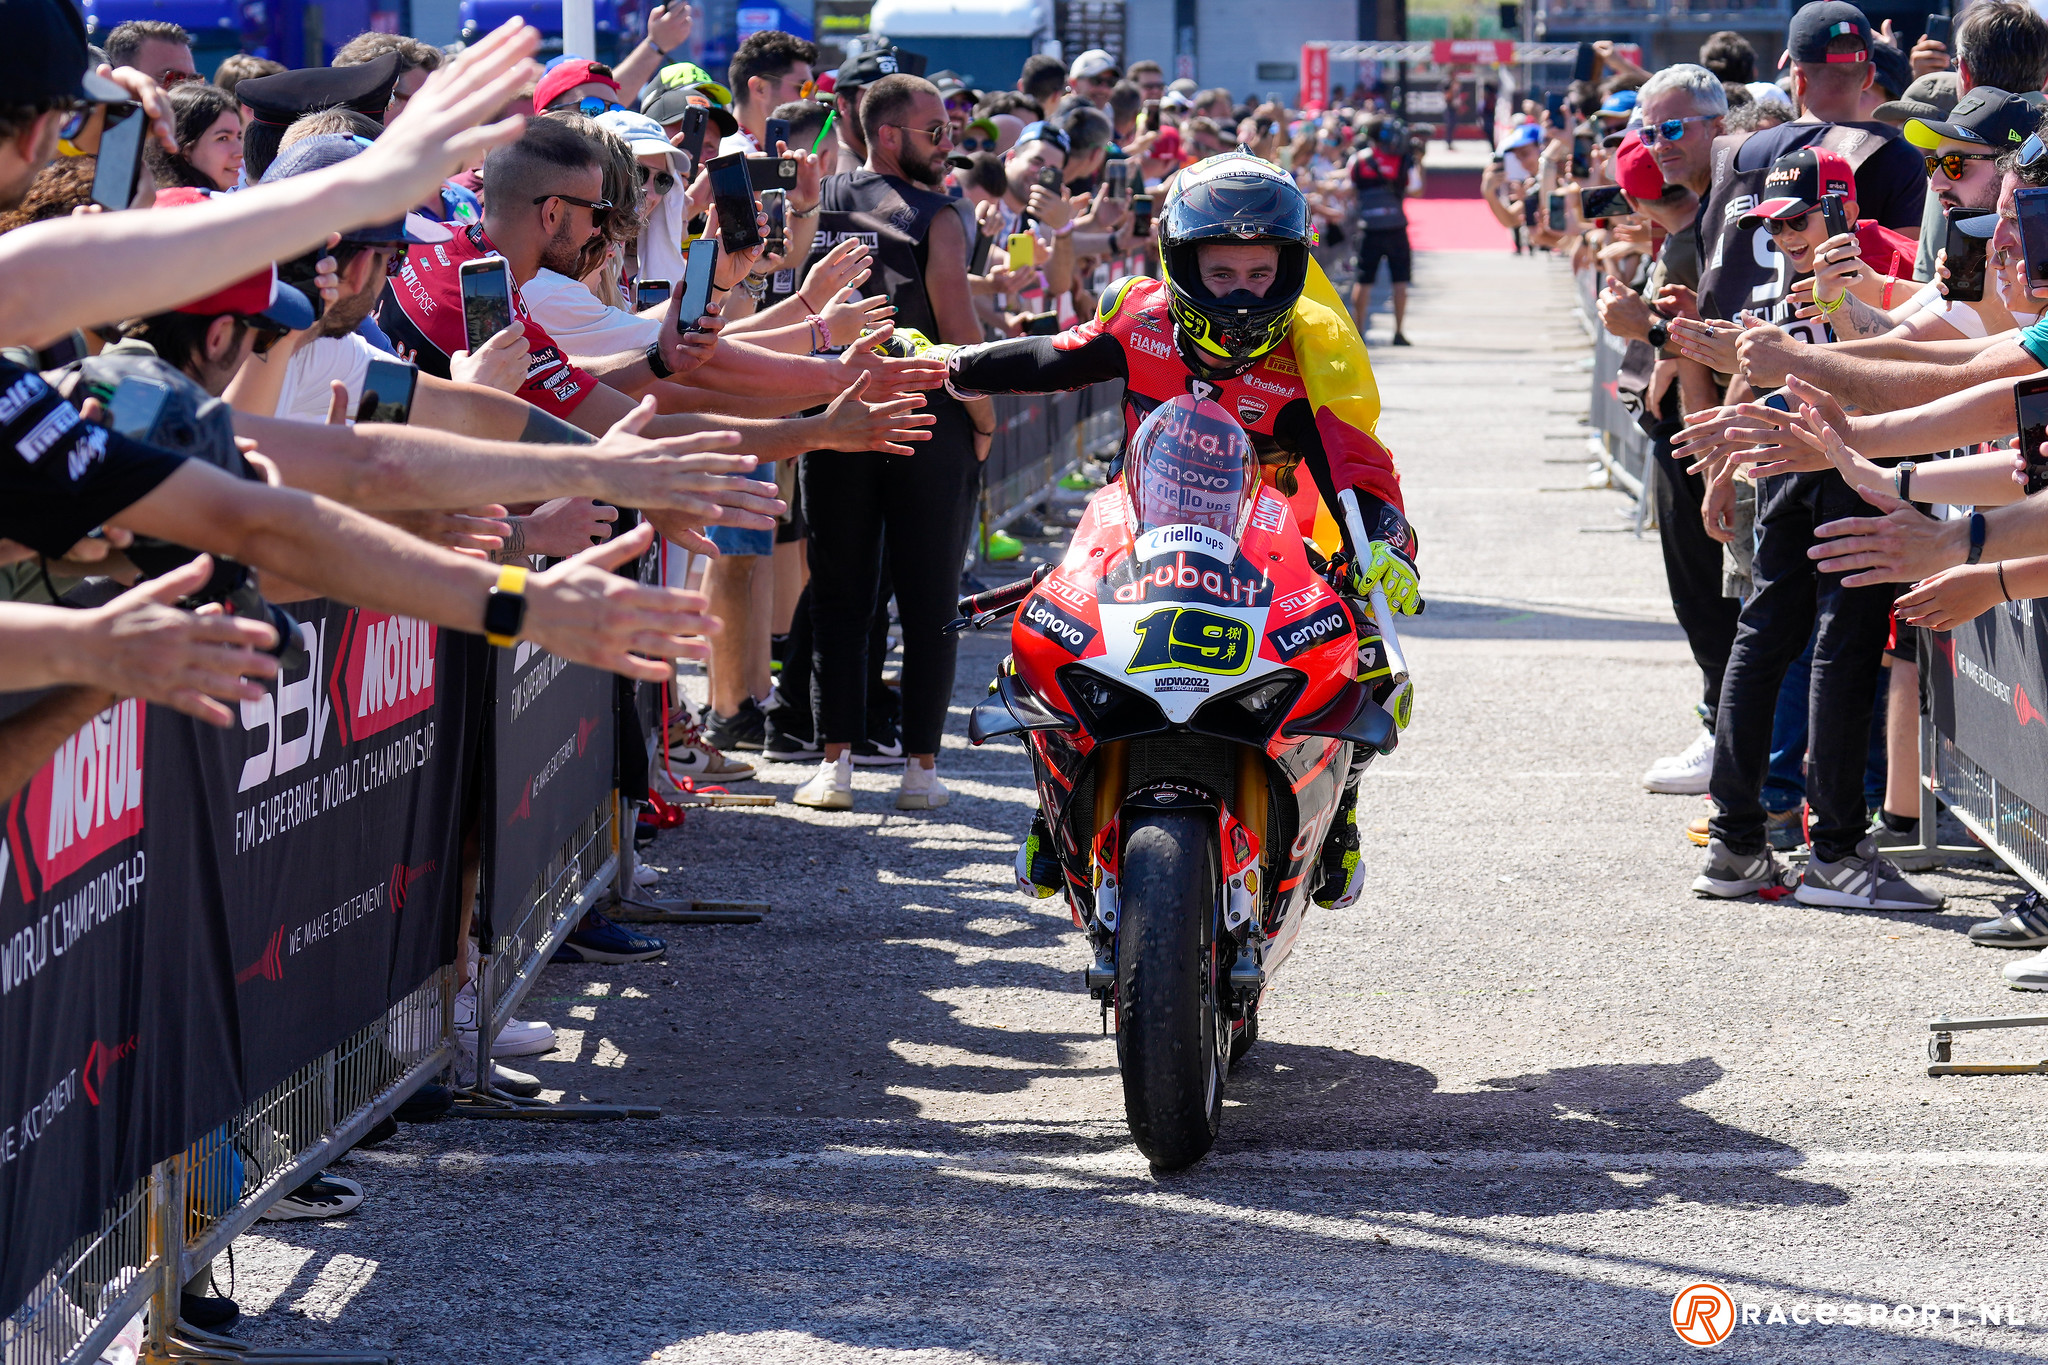 #19 Alvaro Bautista - ESP - Aruba.It Racing Ducati - Ducati Panigale V4R